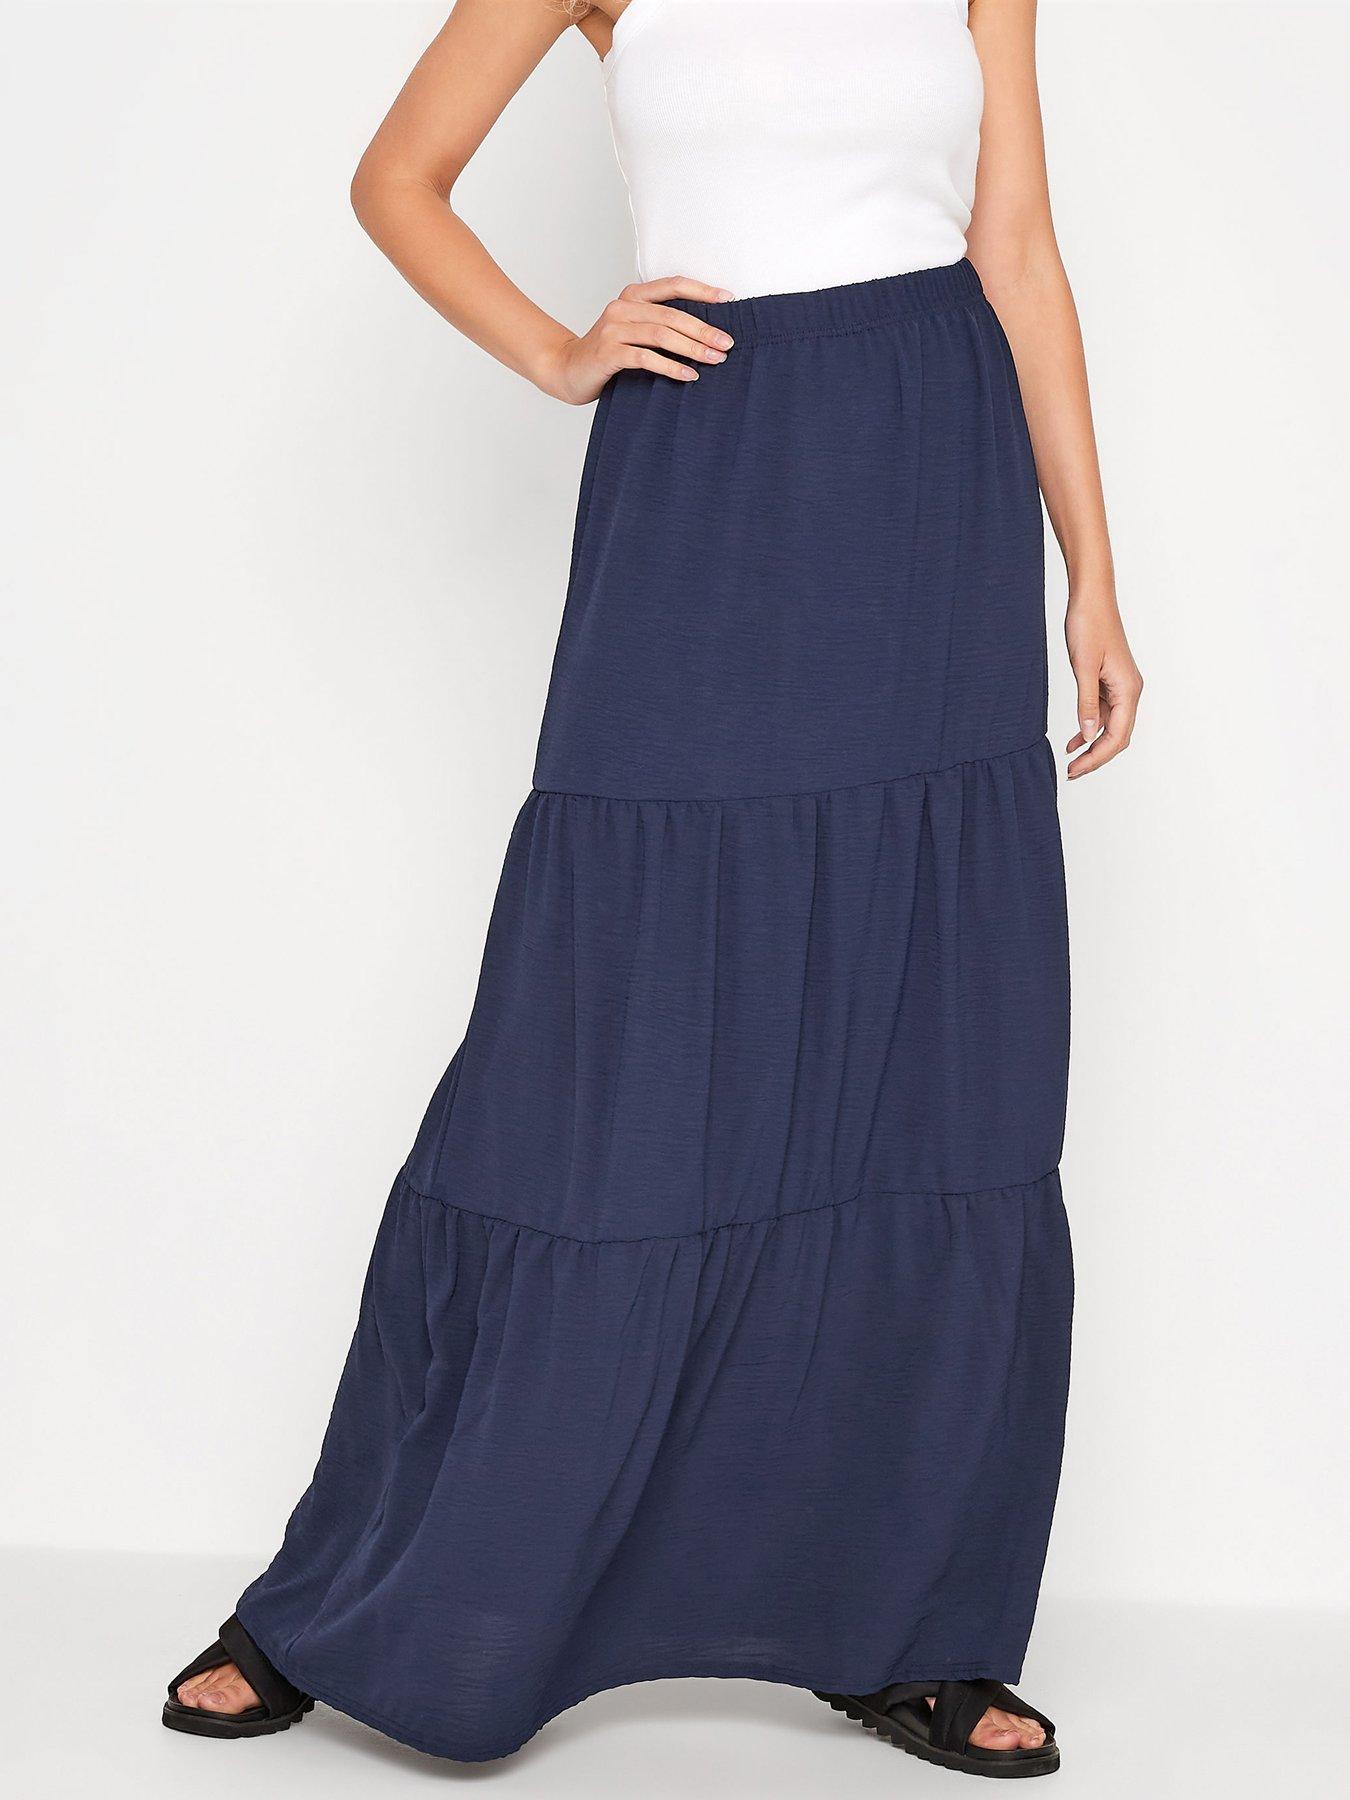 EXTRA LONG TALL Jersey Skirt MAXI Length Plain Print Size 8 10 12 14 16 18 20 